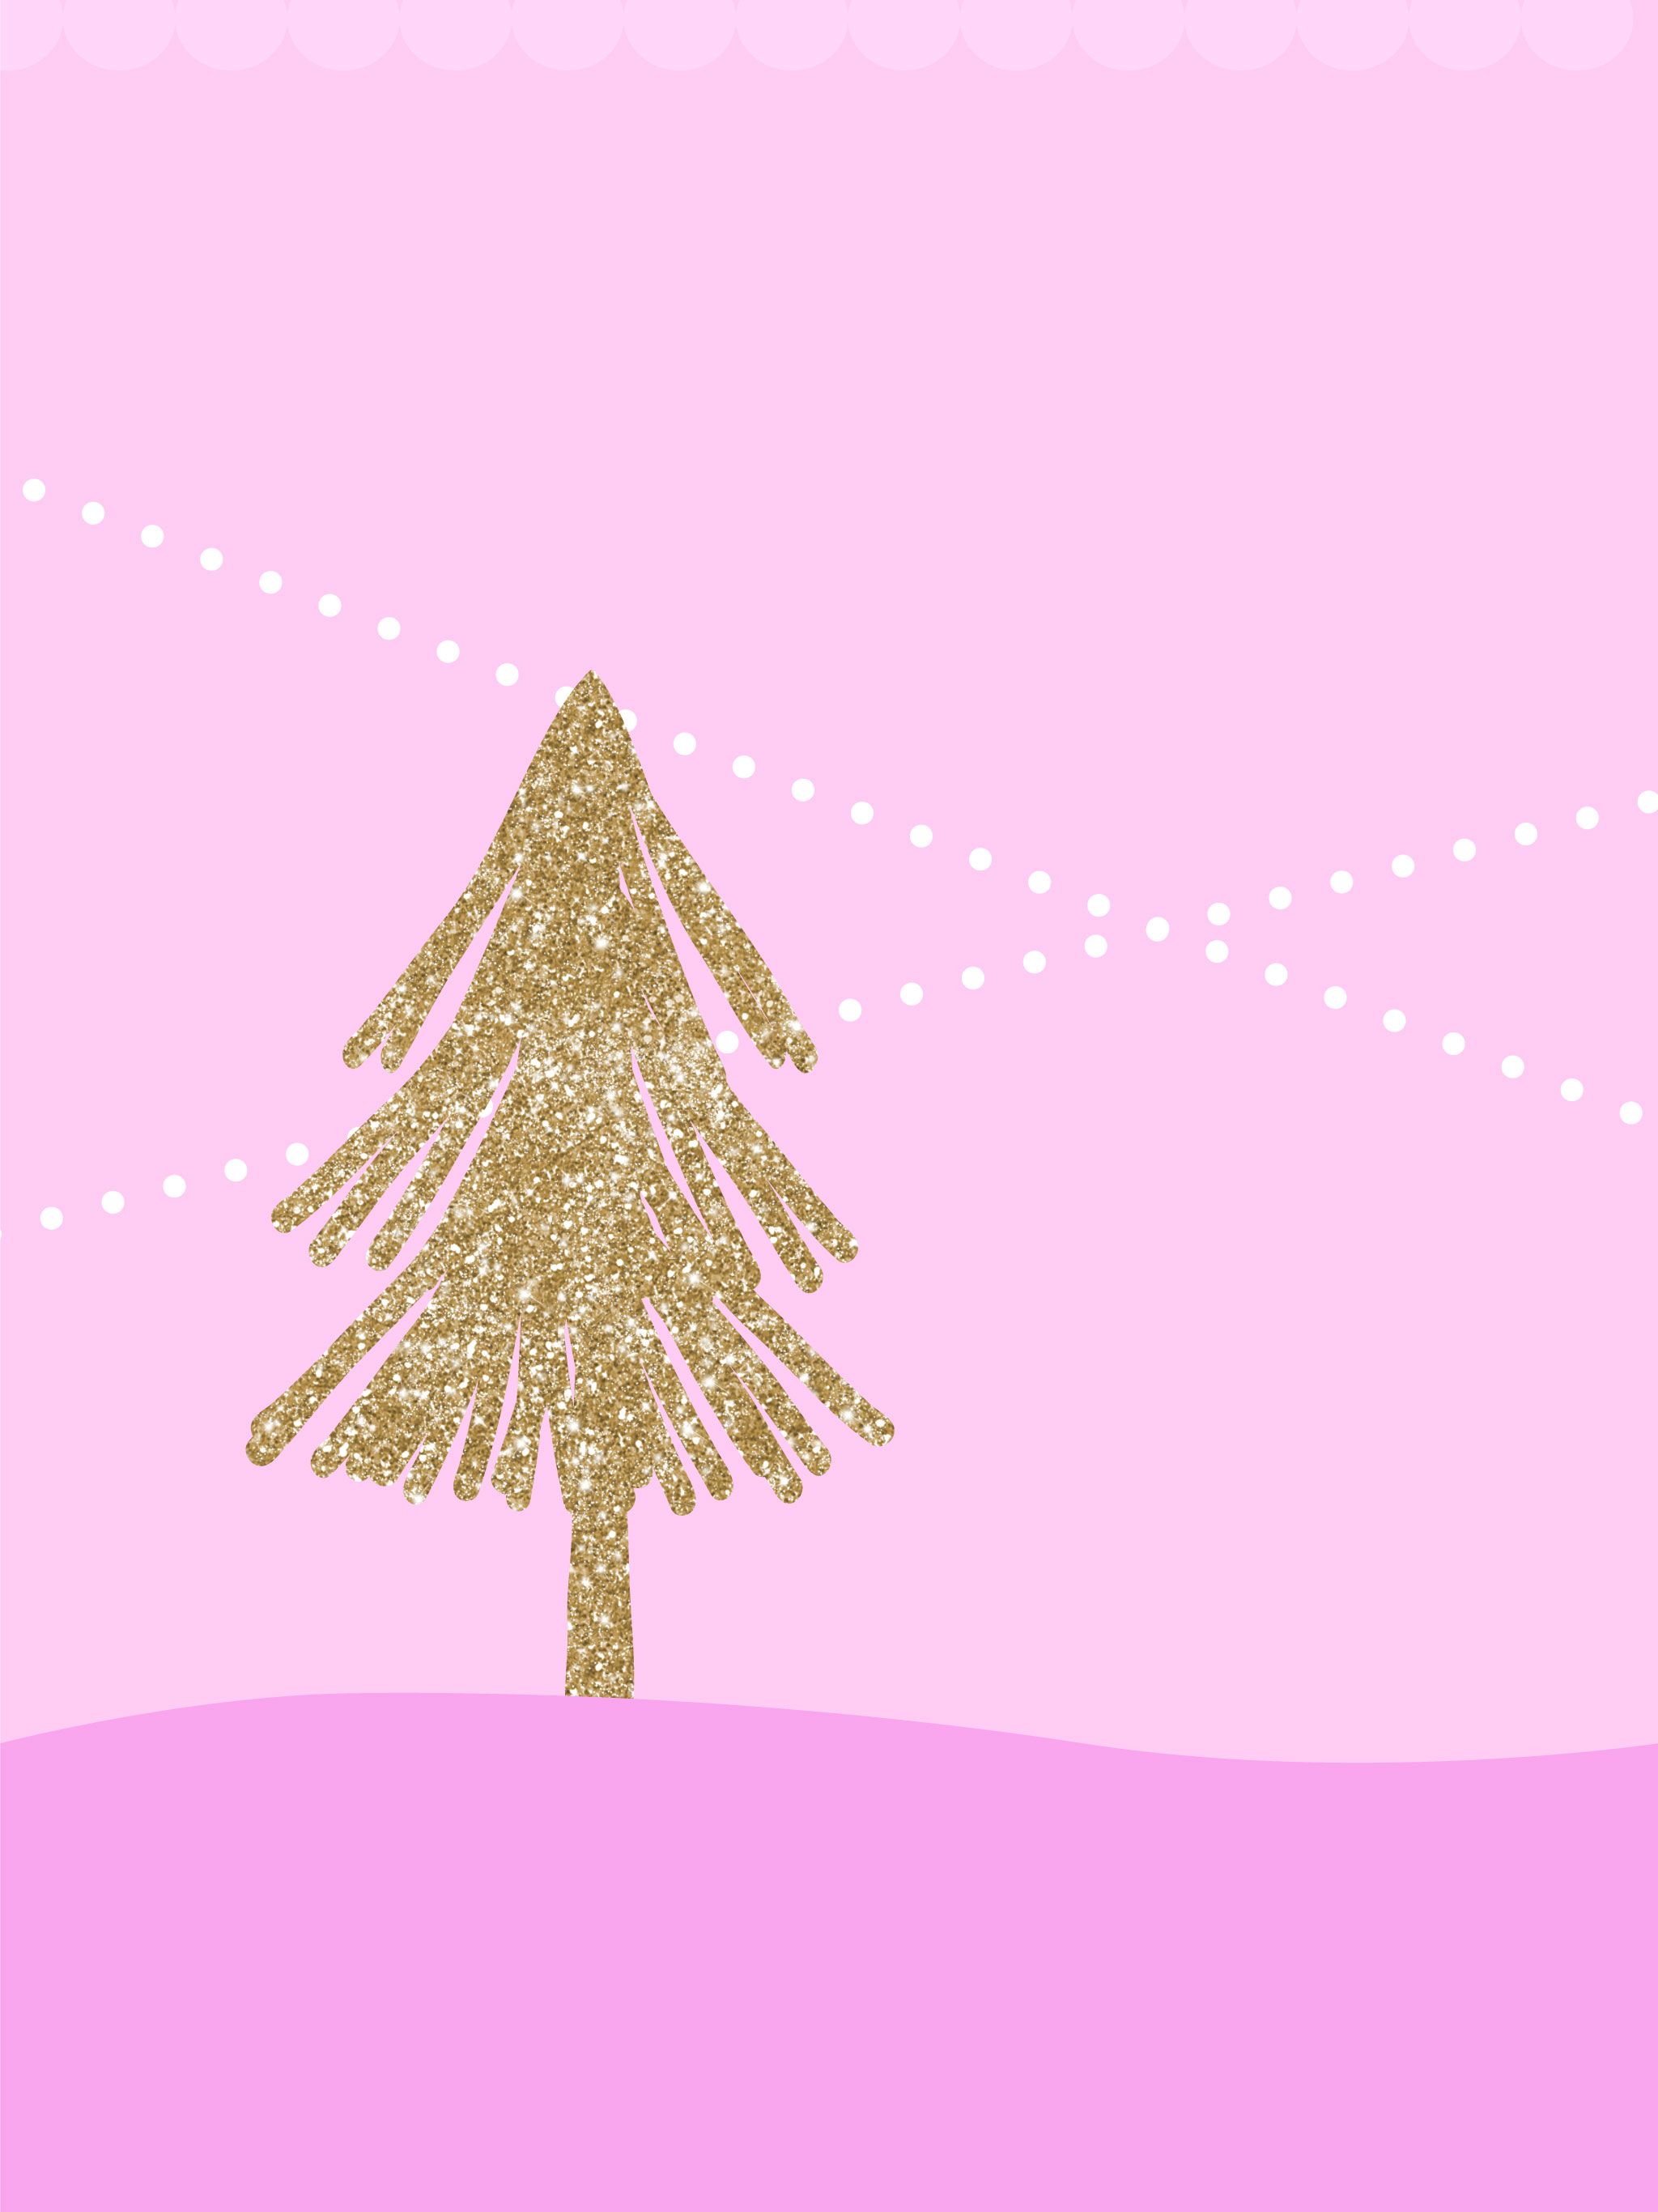 Digital Christmas Wallpaper: Glittery Christmas Tree Pink Fantasia